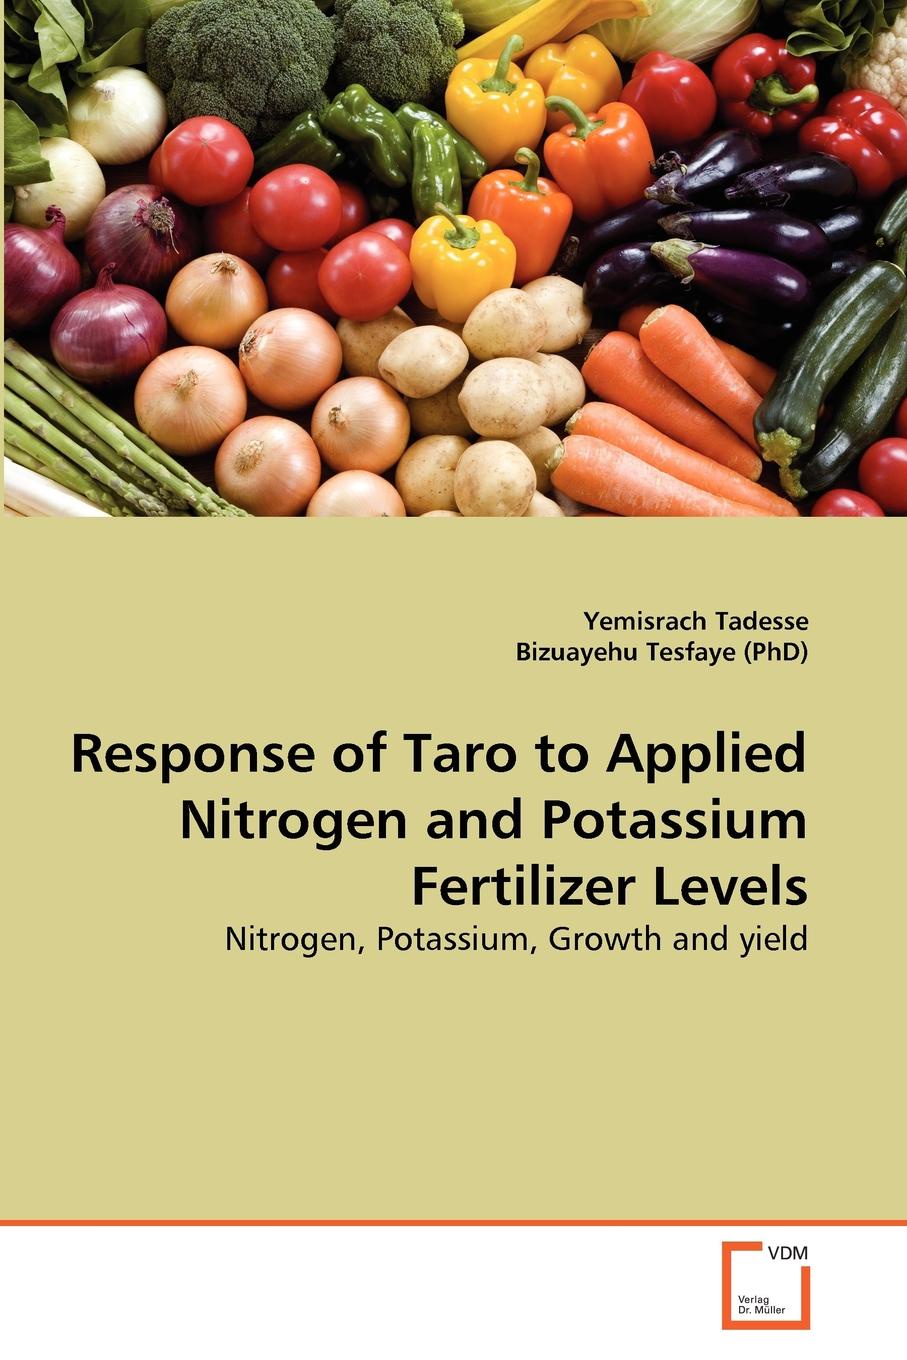 Yemisrach Tadesse, Bizuayehu Tesfaye (PhD) Response of Taro to Applied Nitrogen and Potassium Fertilizer Levels